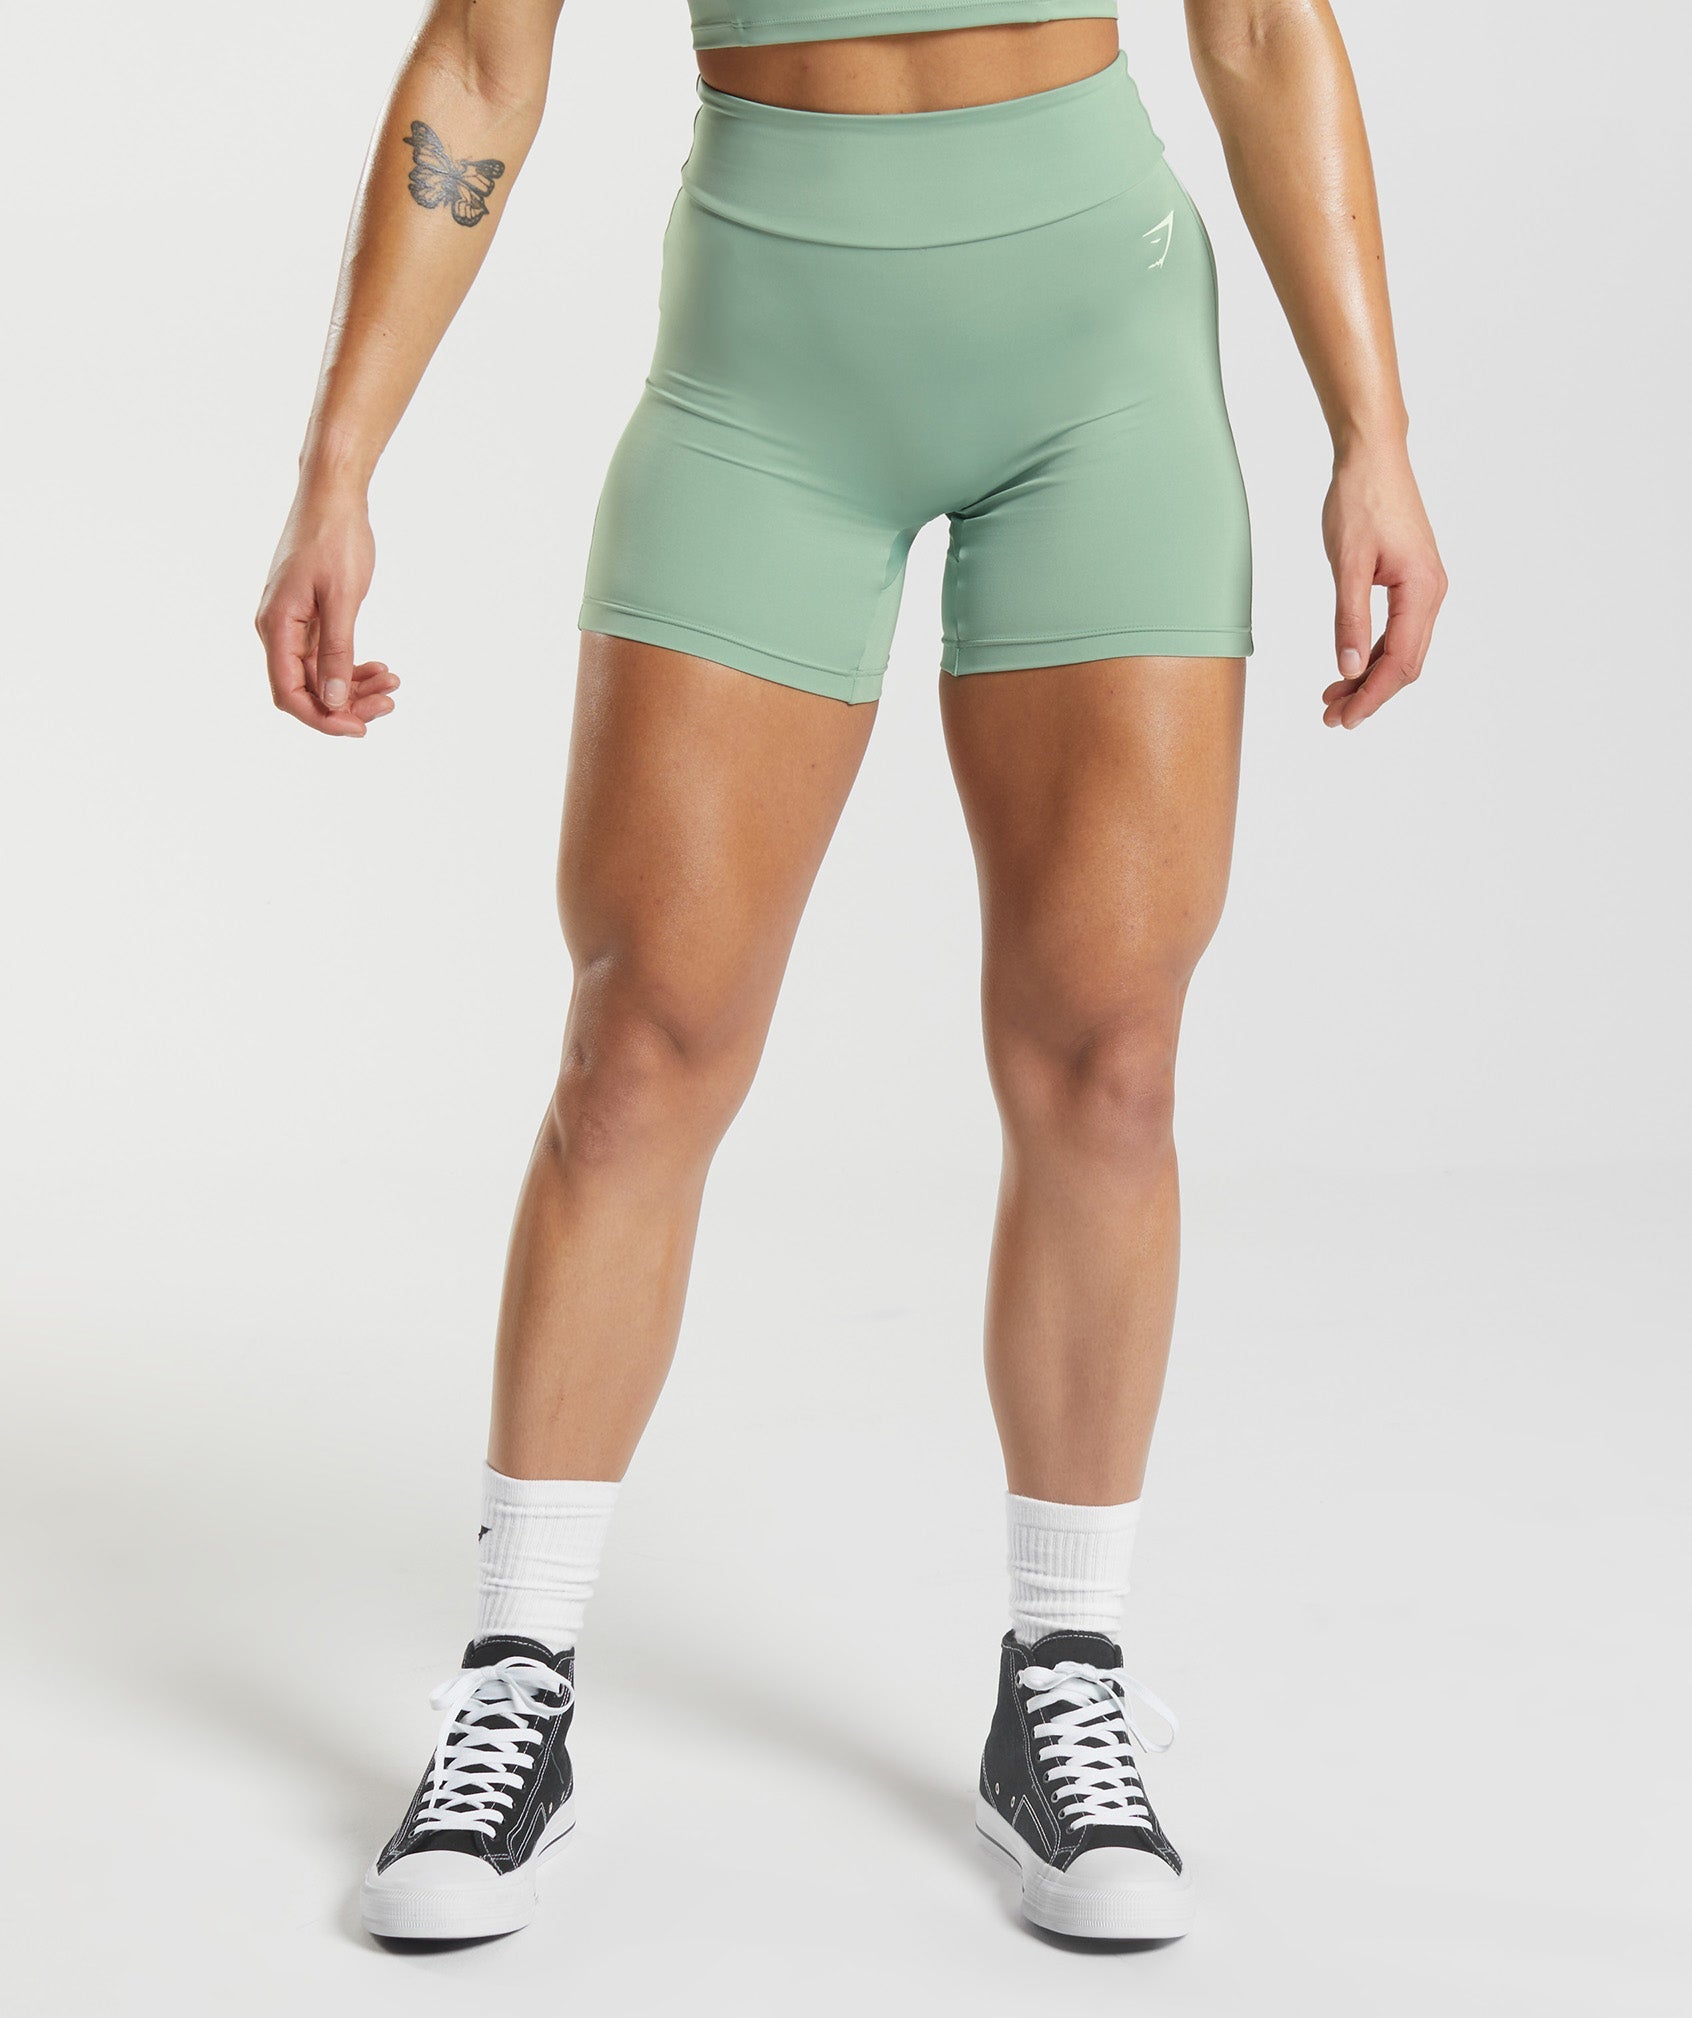 Men's Gym Shorts & Workout Shorts - Gymshark